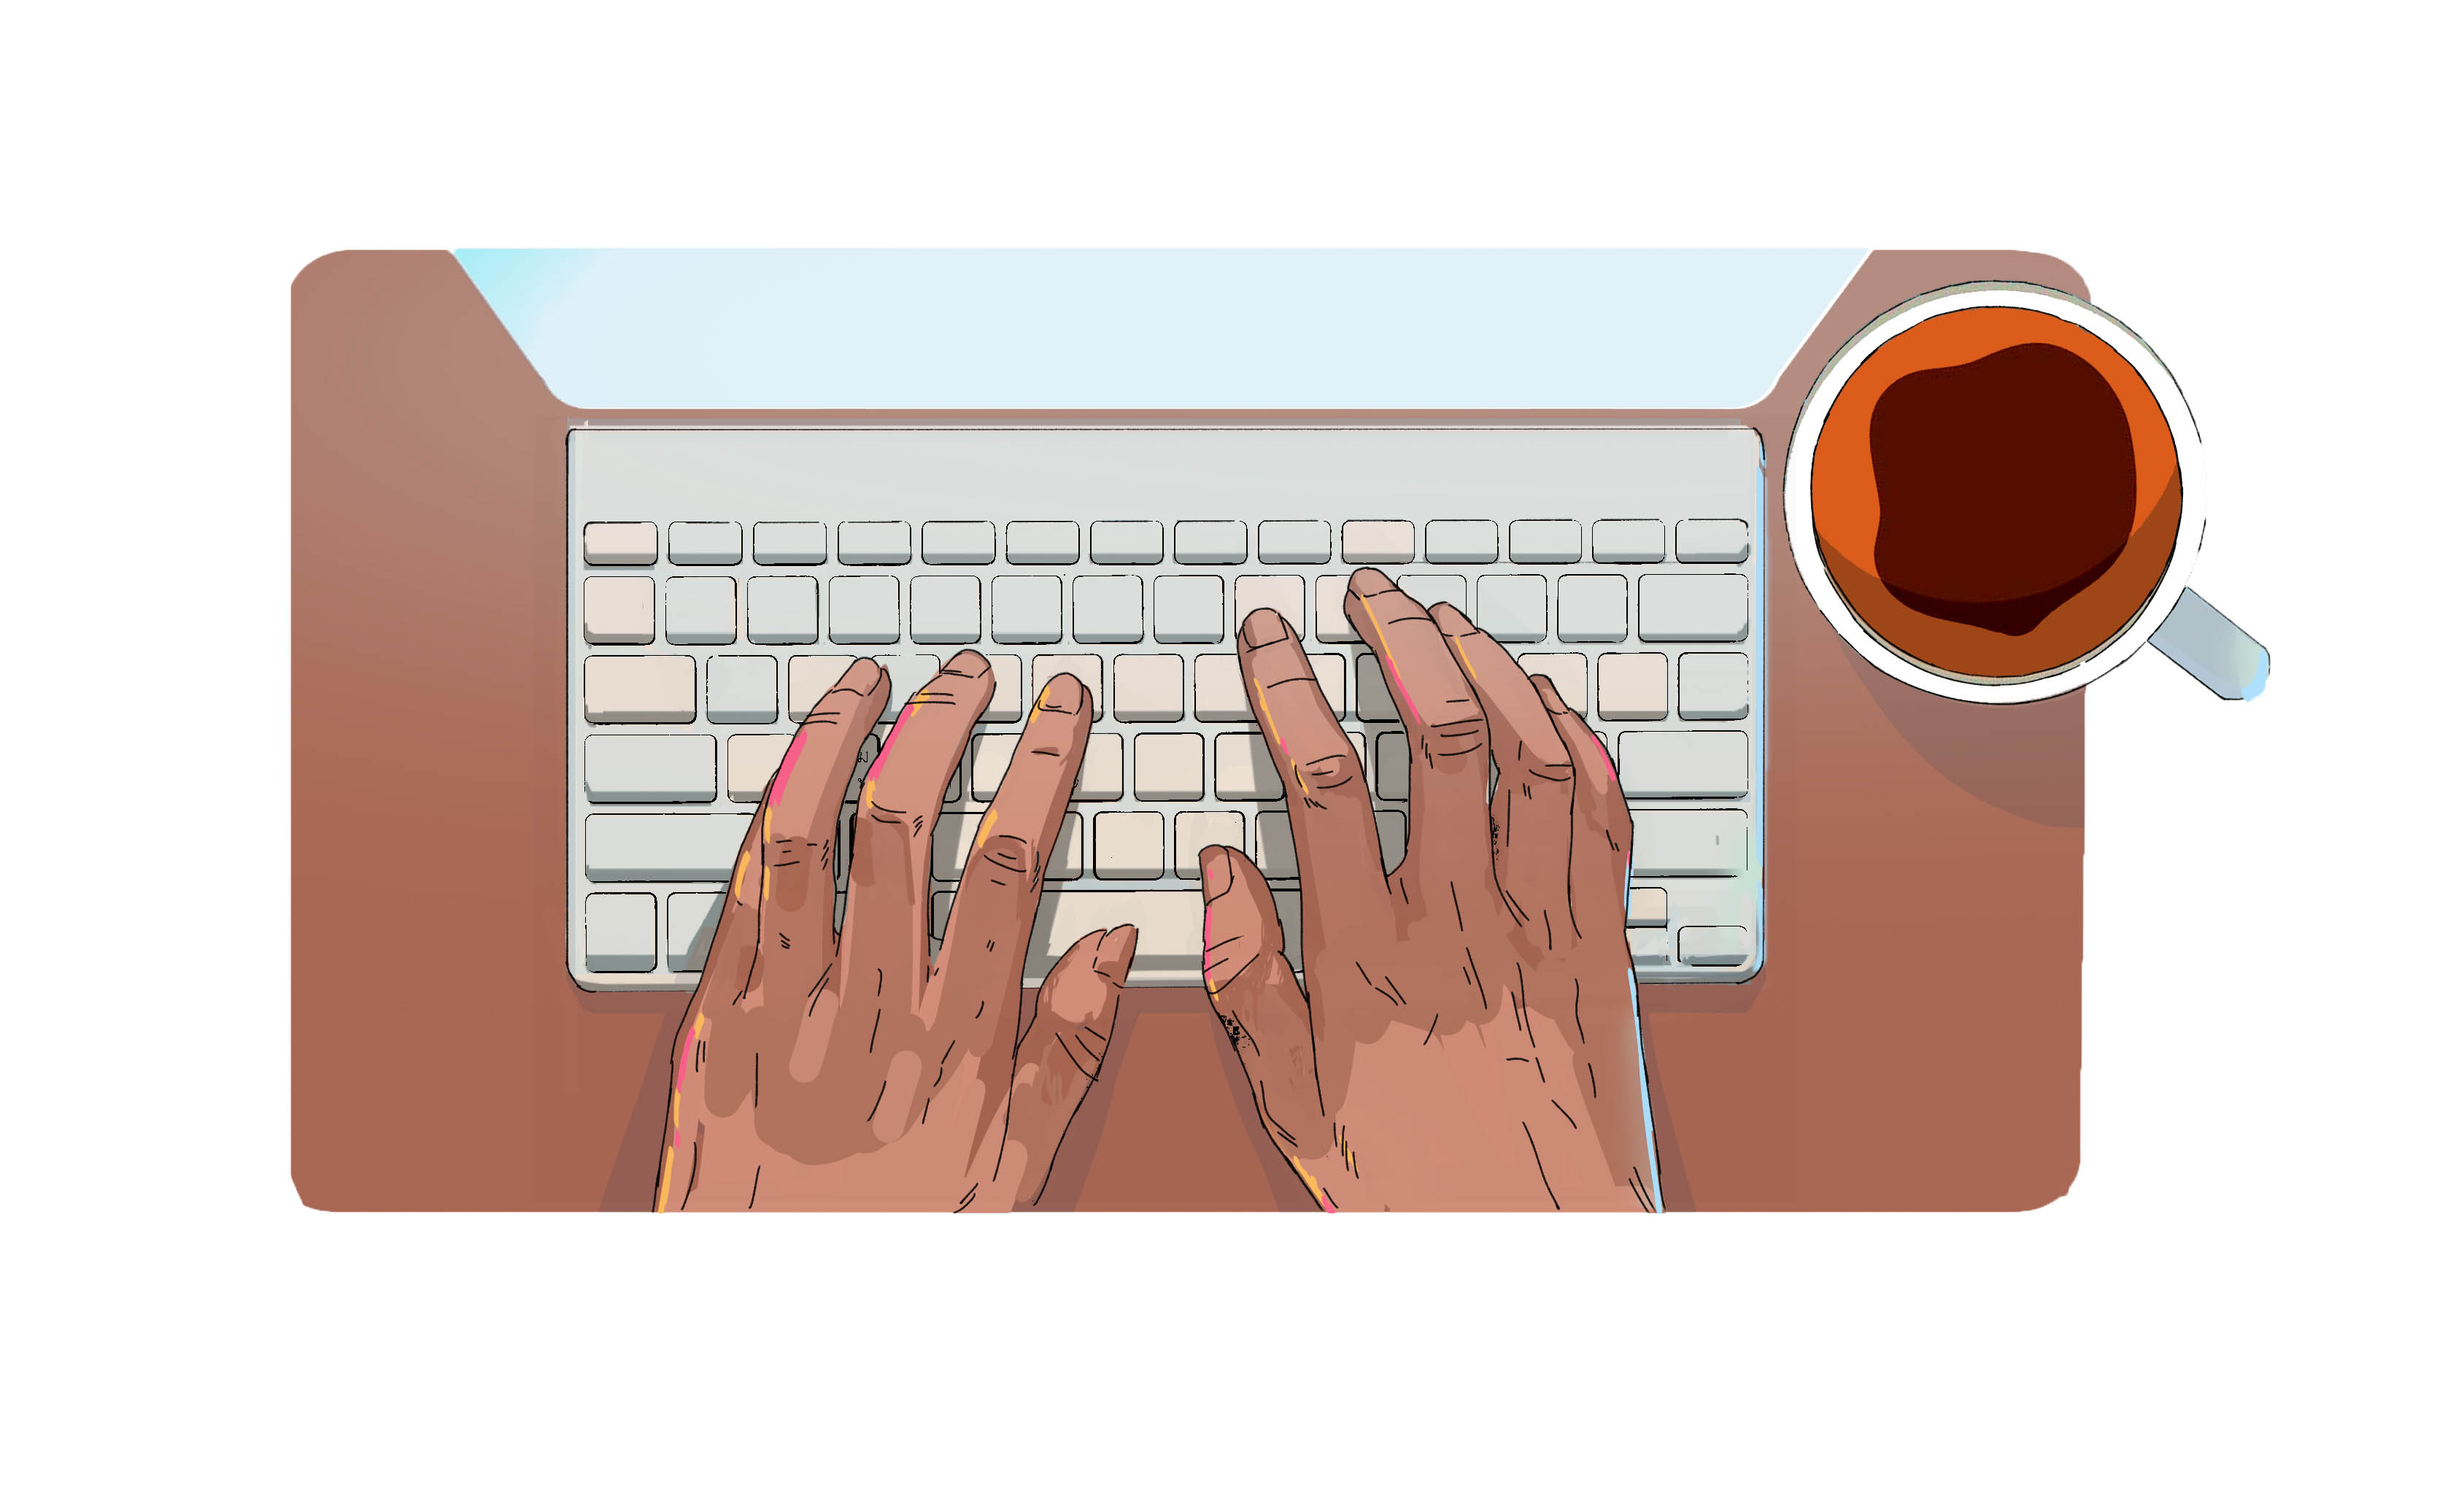 En hånd som taster på tastaturet